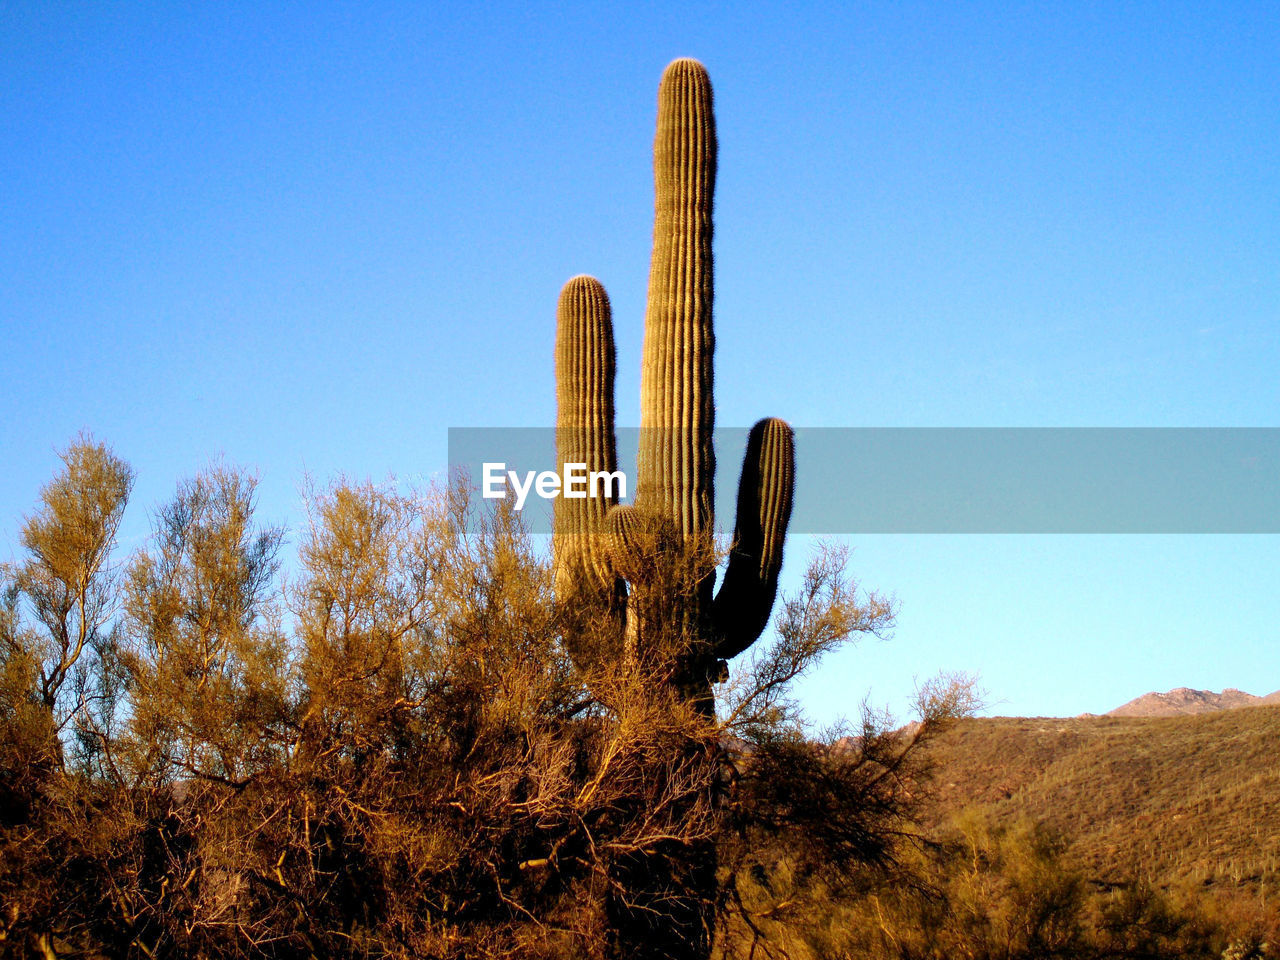 Saguaro cactus on field against clear blue sky